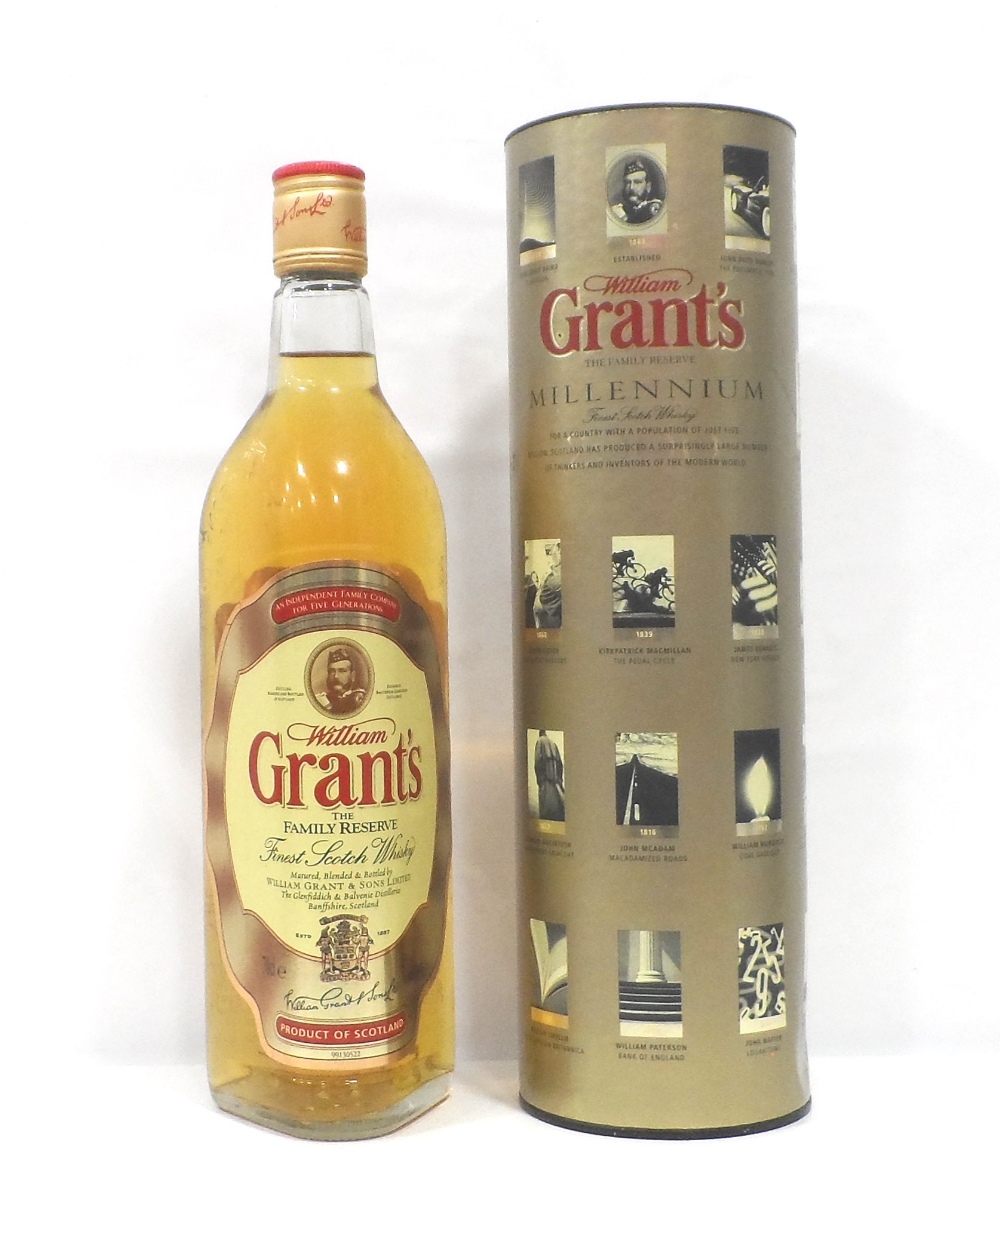 GRANT'S MILLENNIUM A bottle of William Grant's The Family Reserve Millennium Blended Scotch